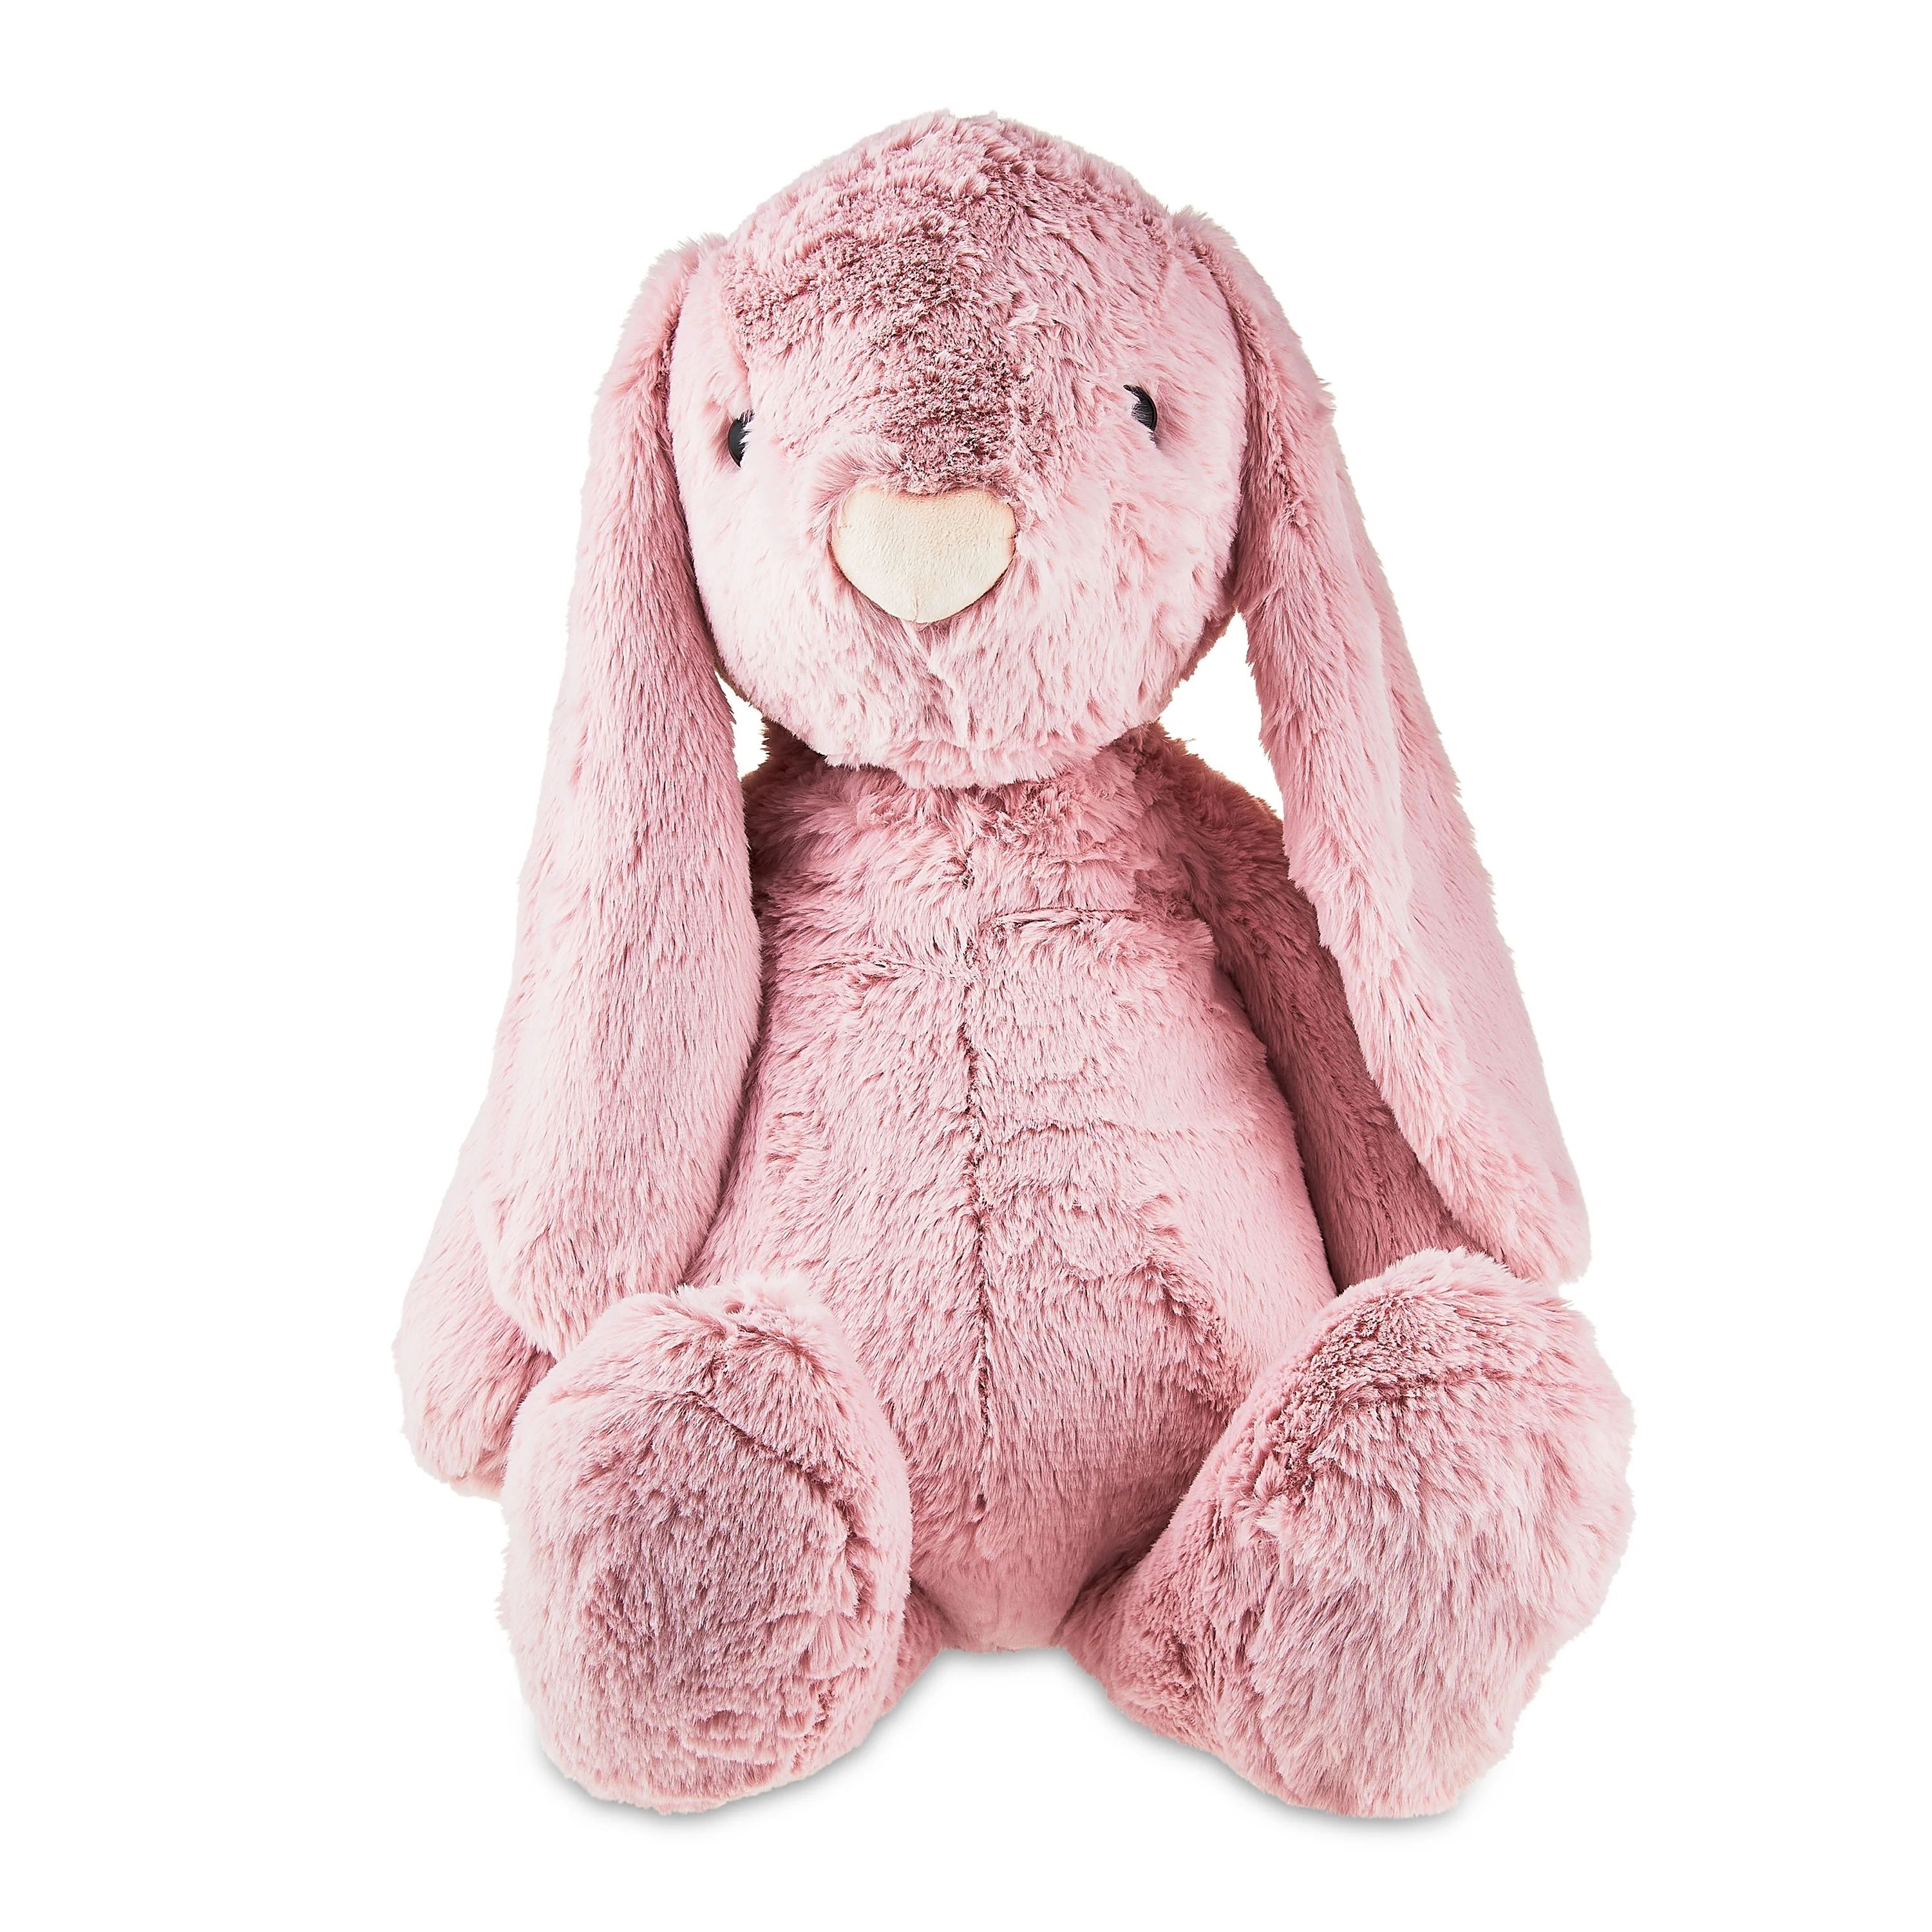 Easter Dusty Pink Bunny Plush, by Way To Celebrate - Walmart.com | Walmart (US)